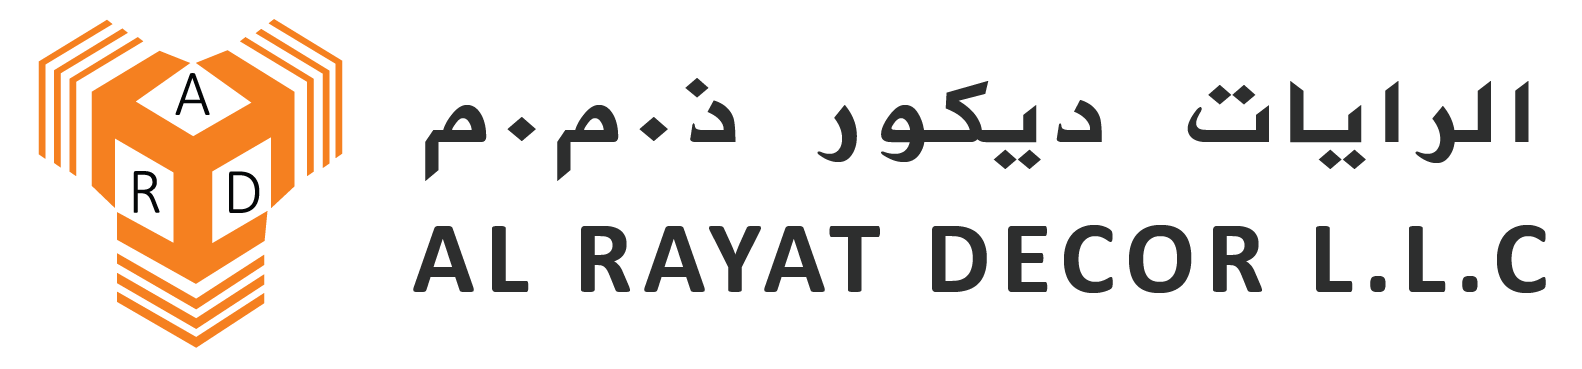 Al Rayat Decor Logo